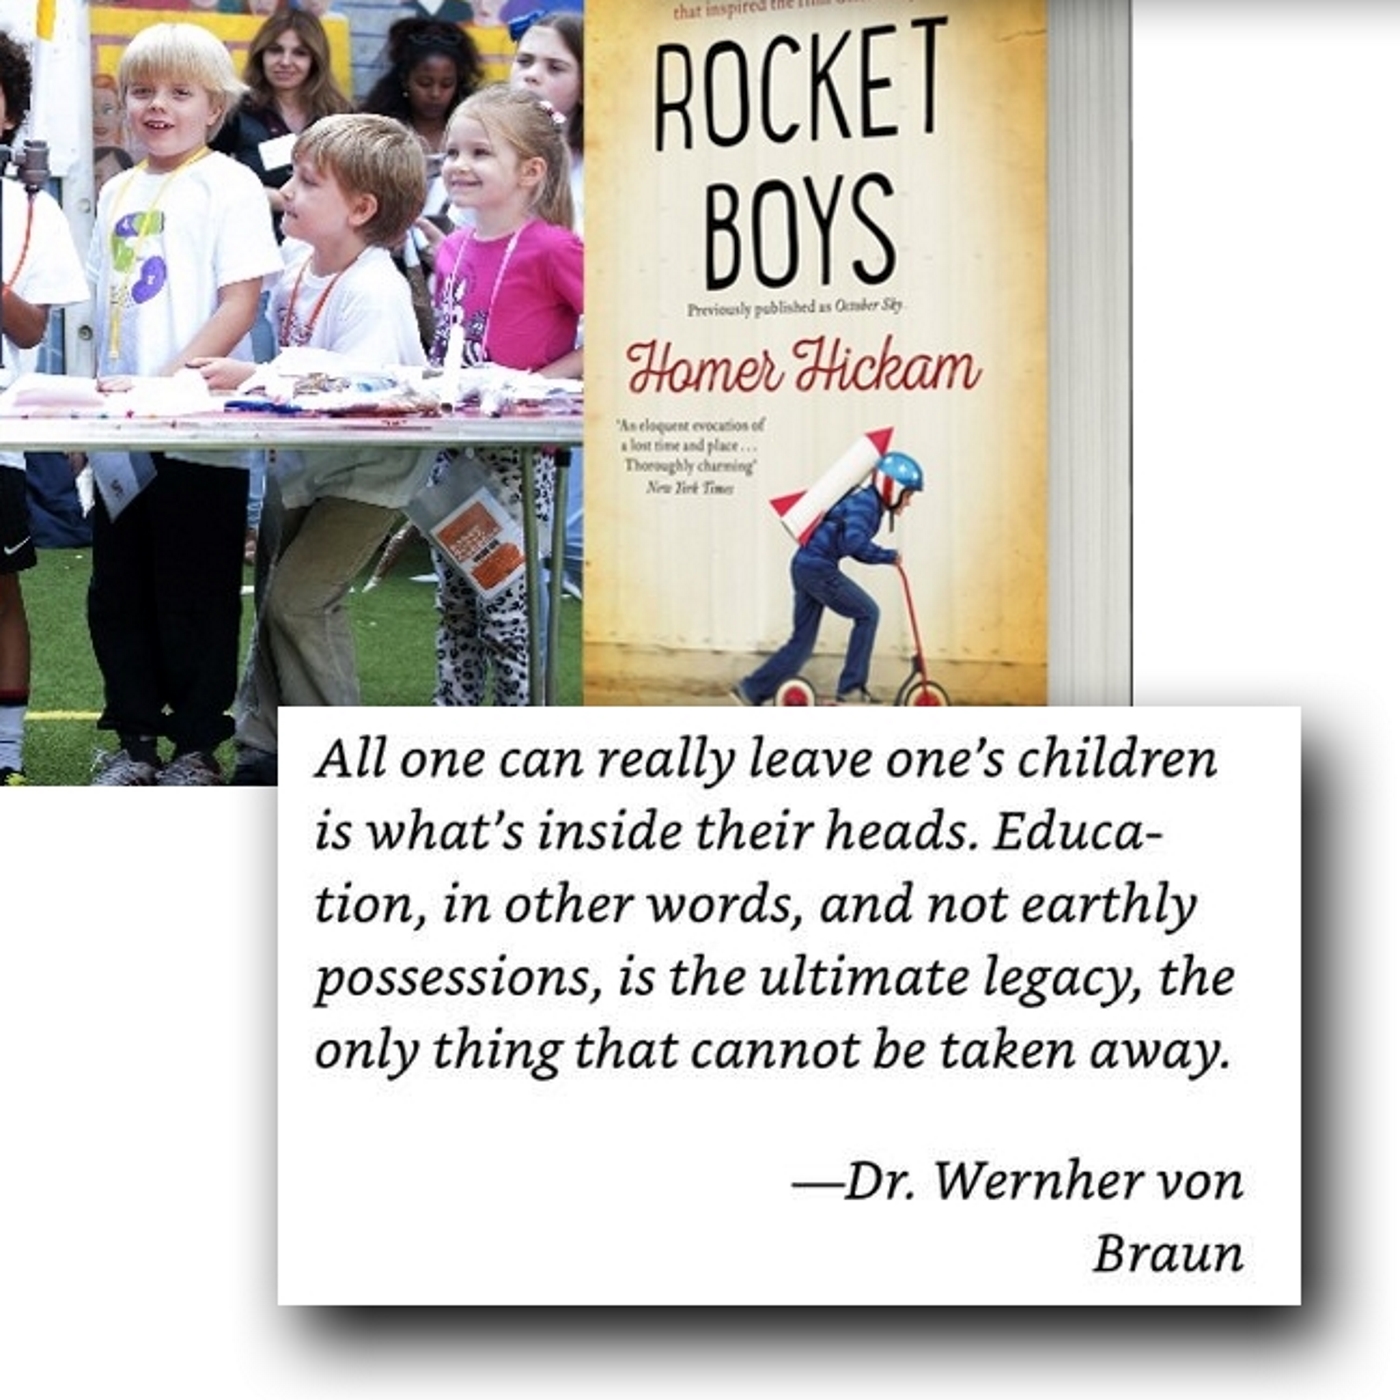 Rocket Boys book comp 2.jpg